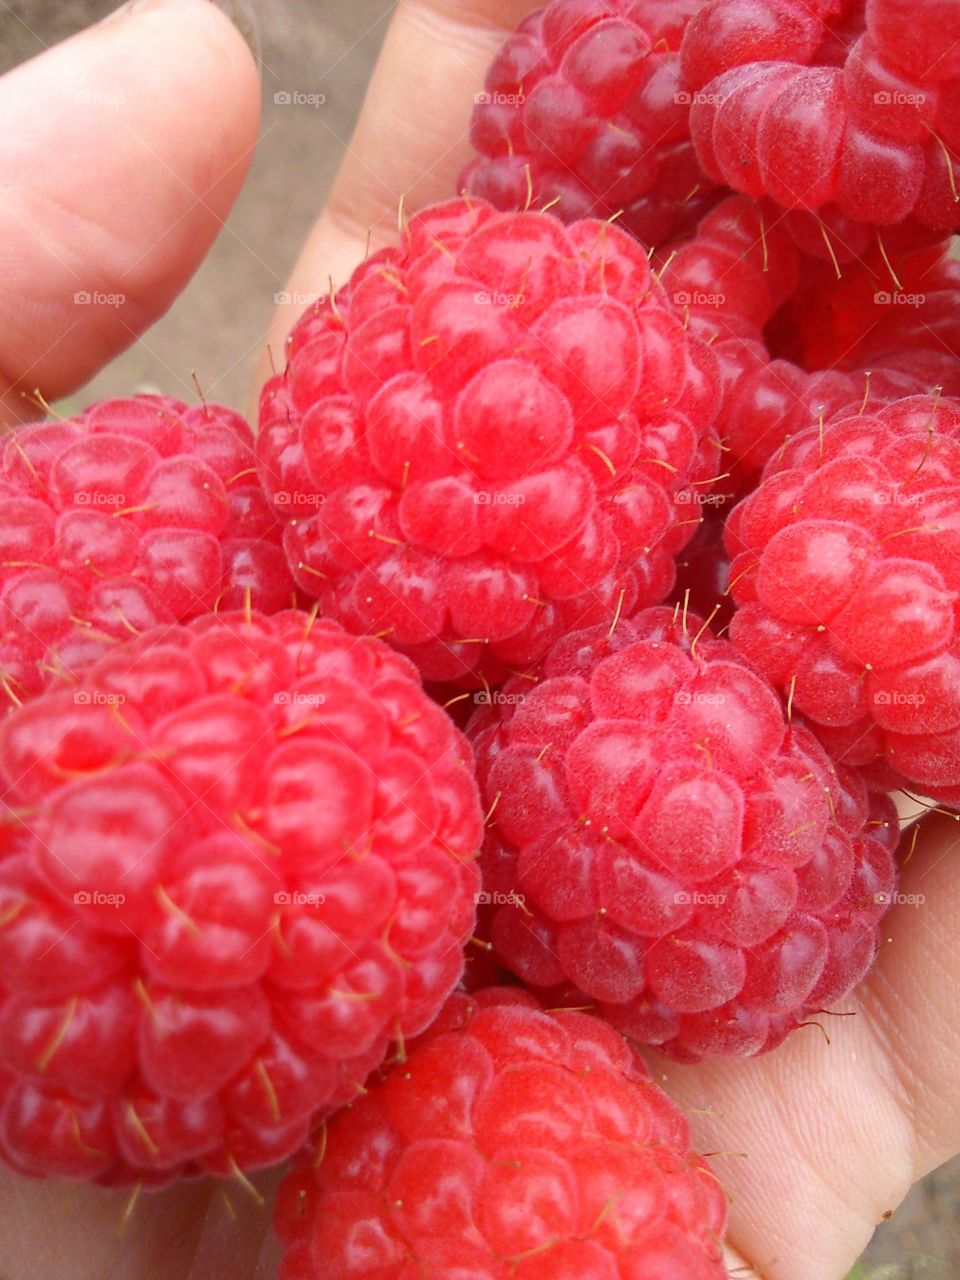 Just berries